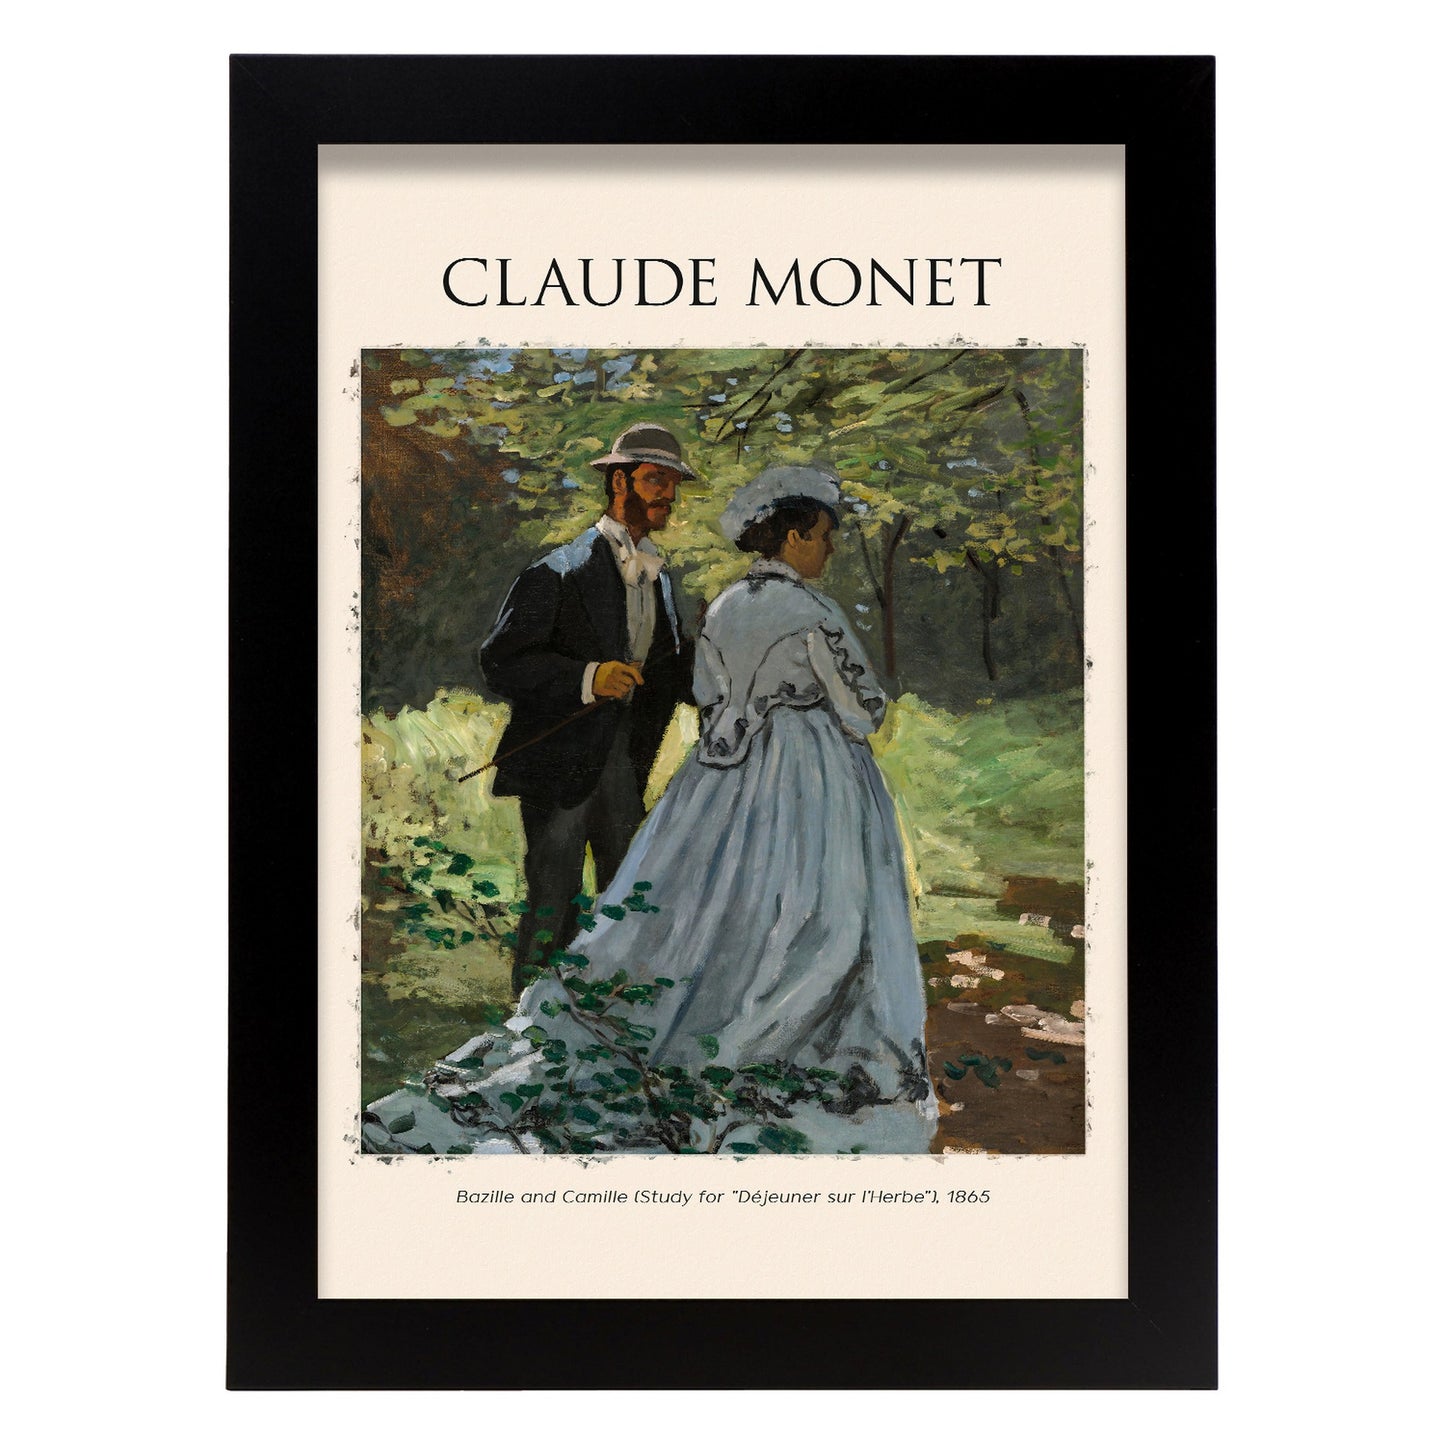 Lámina de arte estético de Bazille y Camille inspirada en Claude Monet